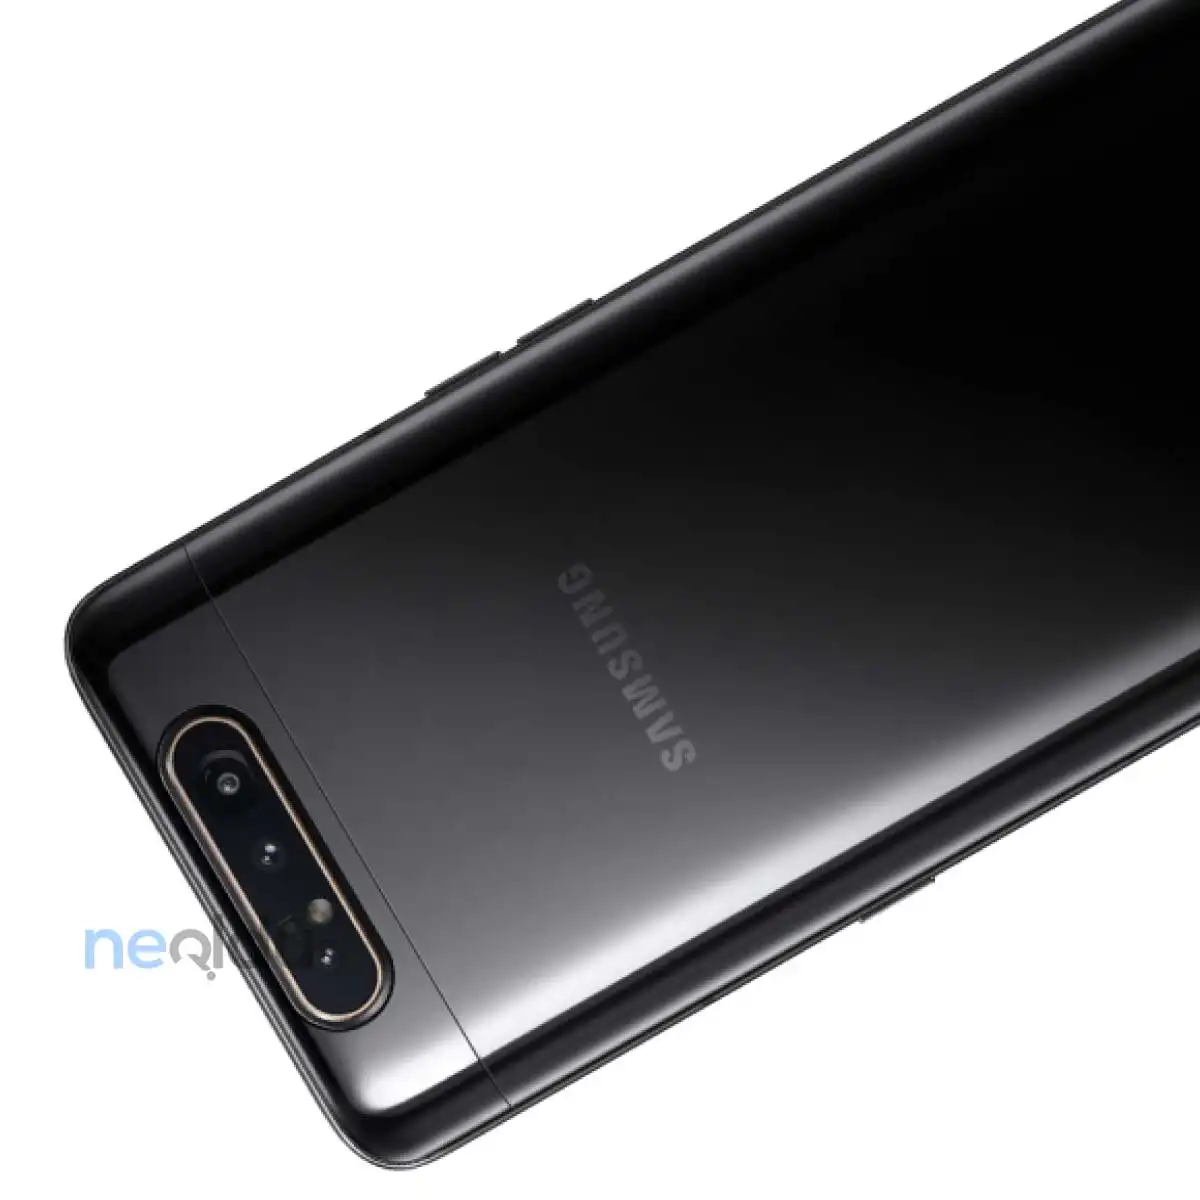 Samsung Galaxy A80 İnceleme